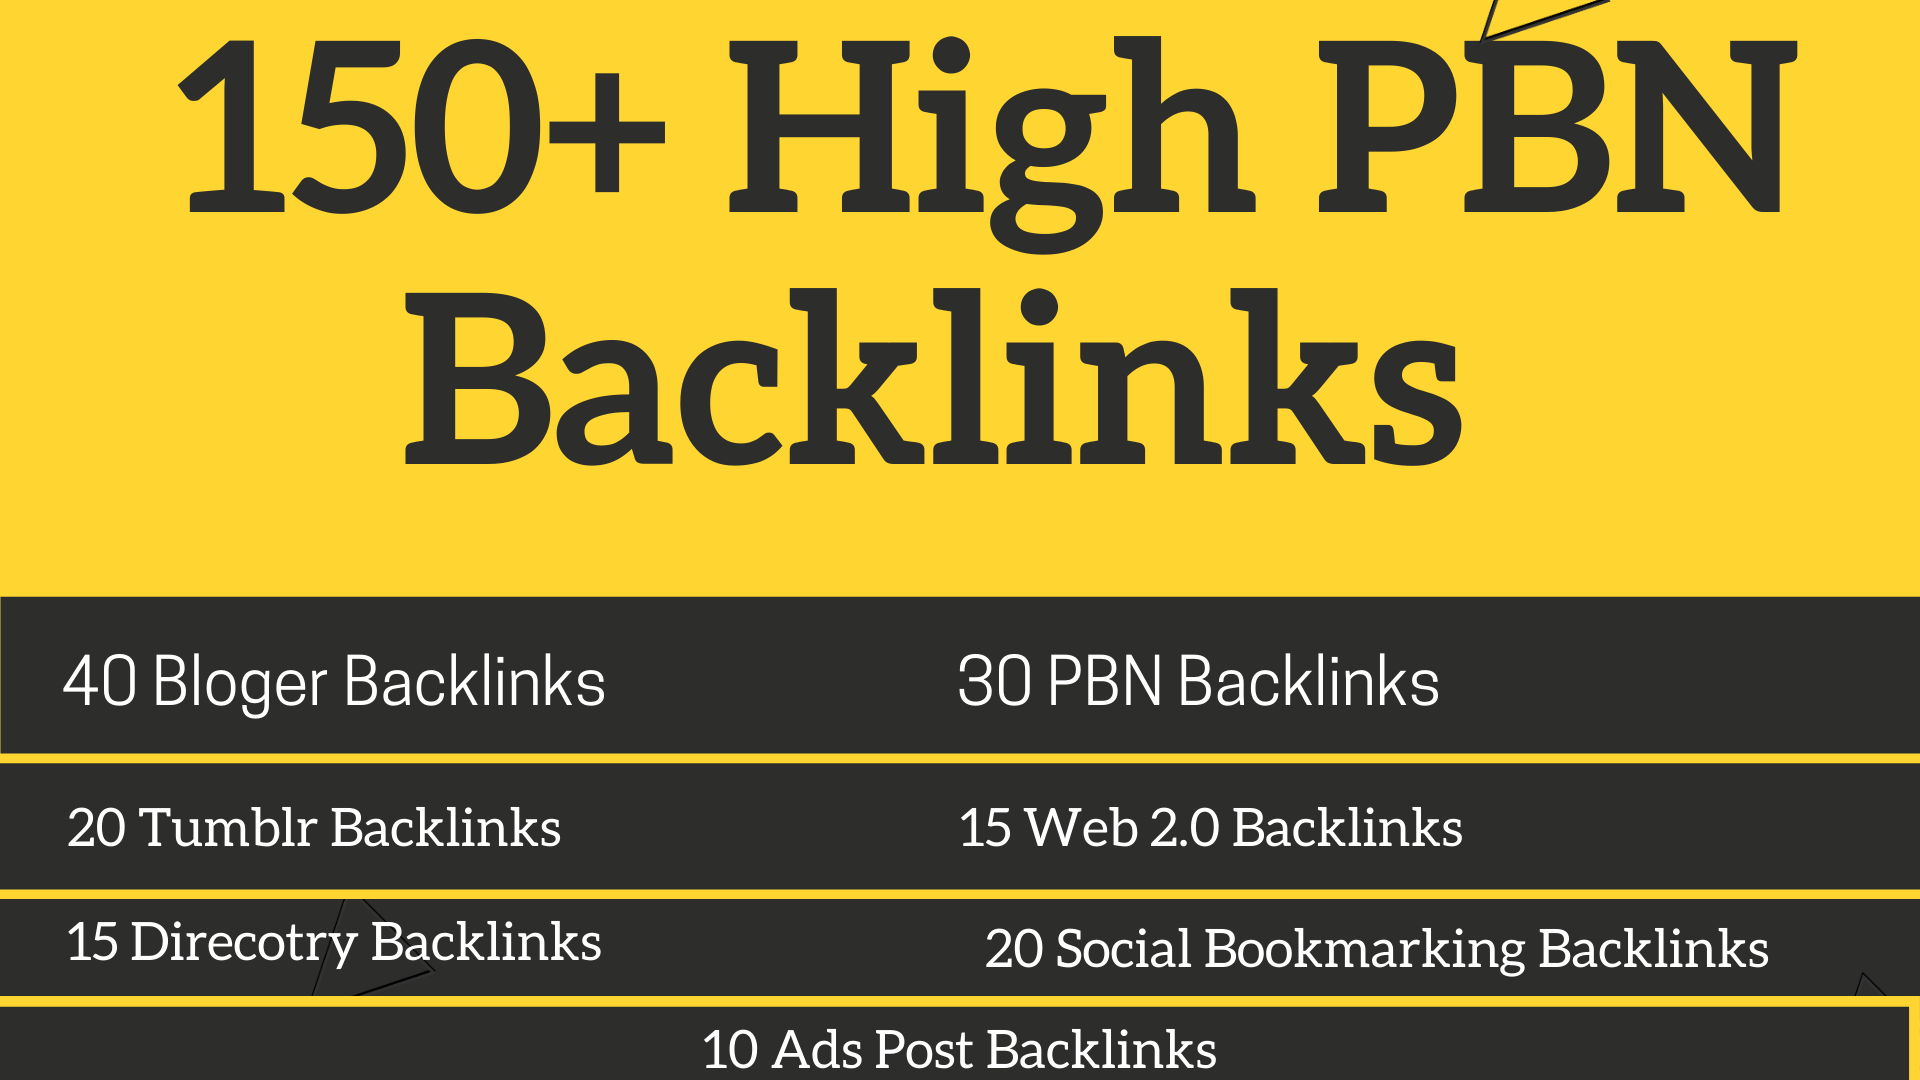 150+ High PBN Backlinks Get rank up your website